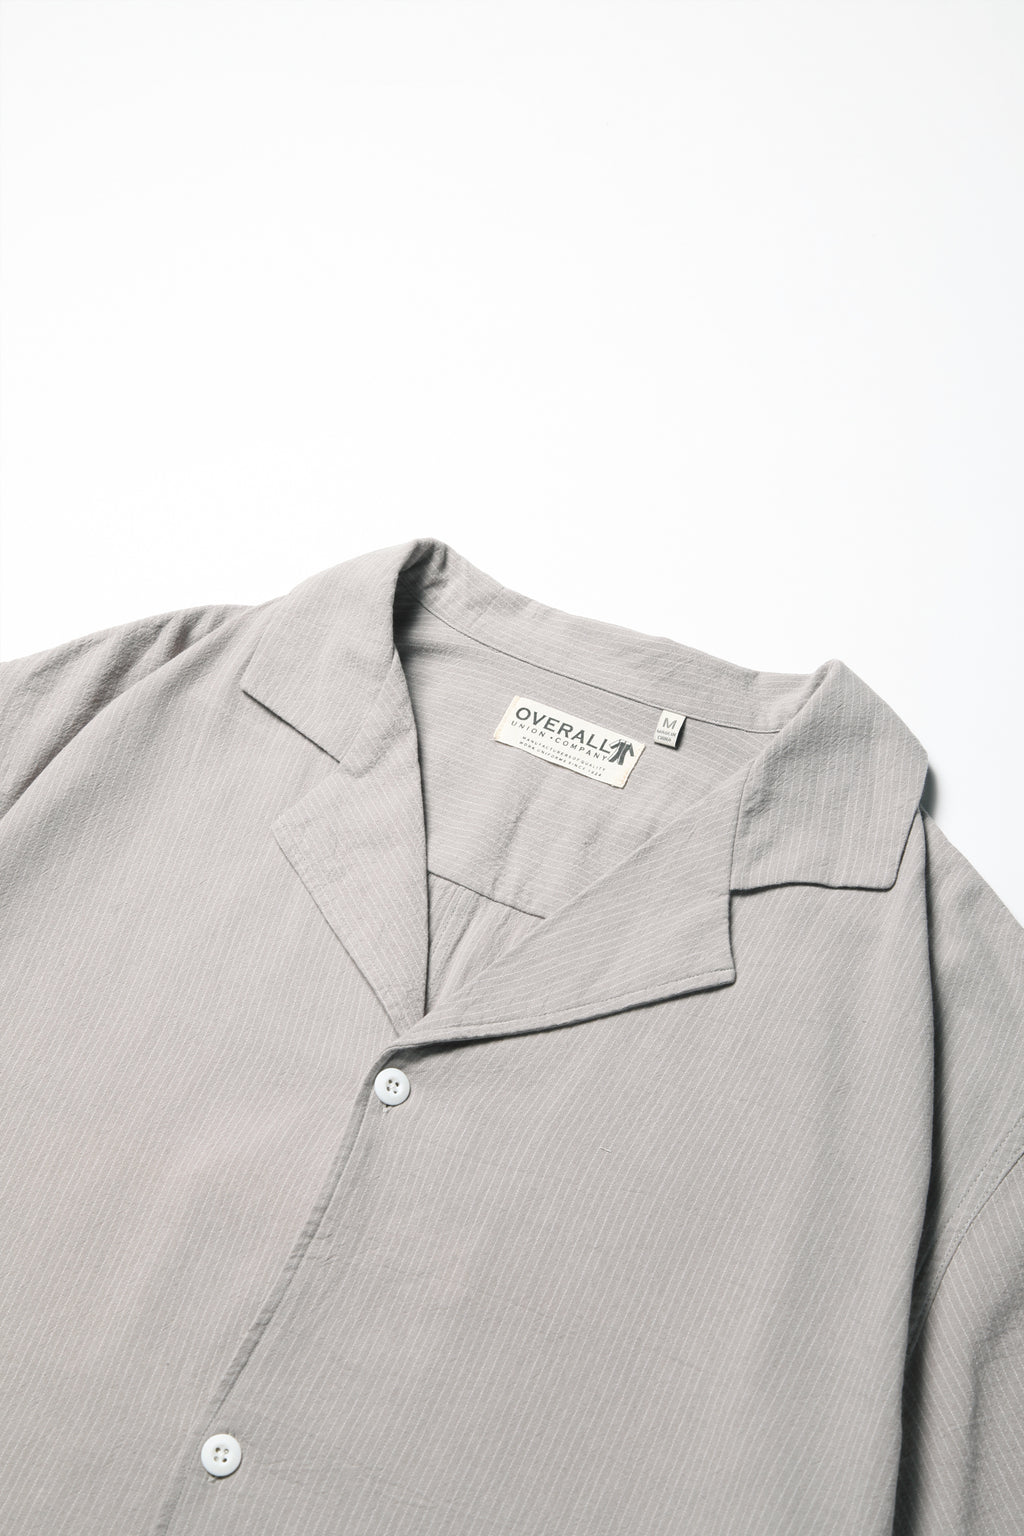 Overall Union - Boxy Short Sleeve Shirt - Light Grey